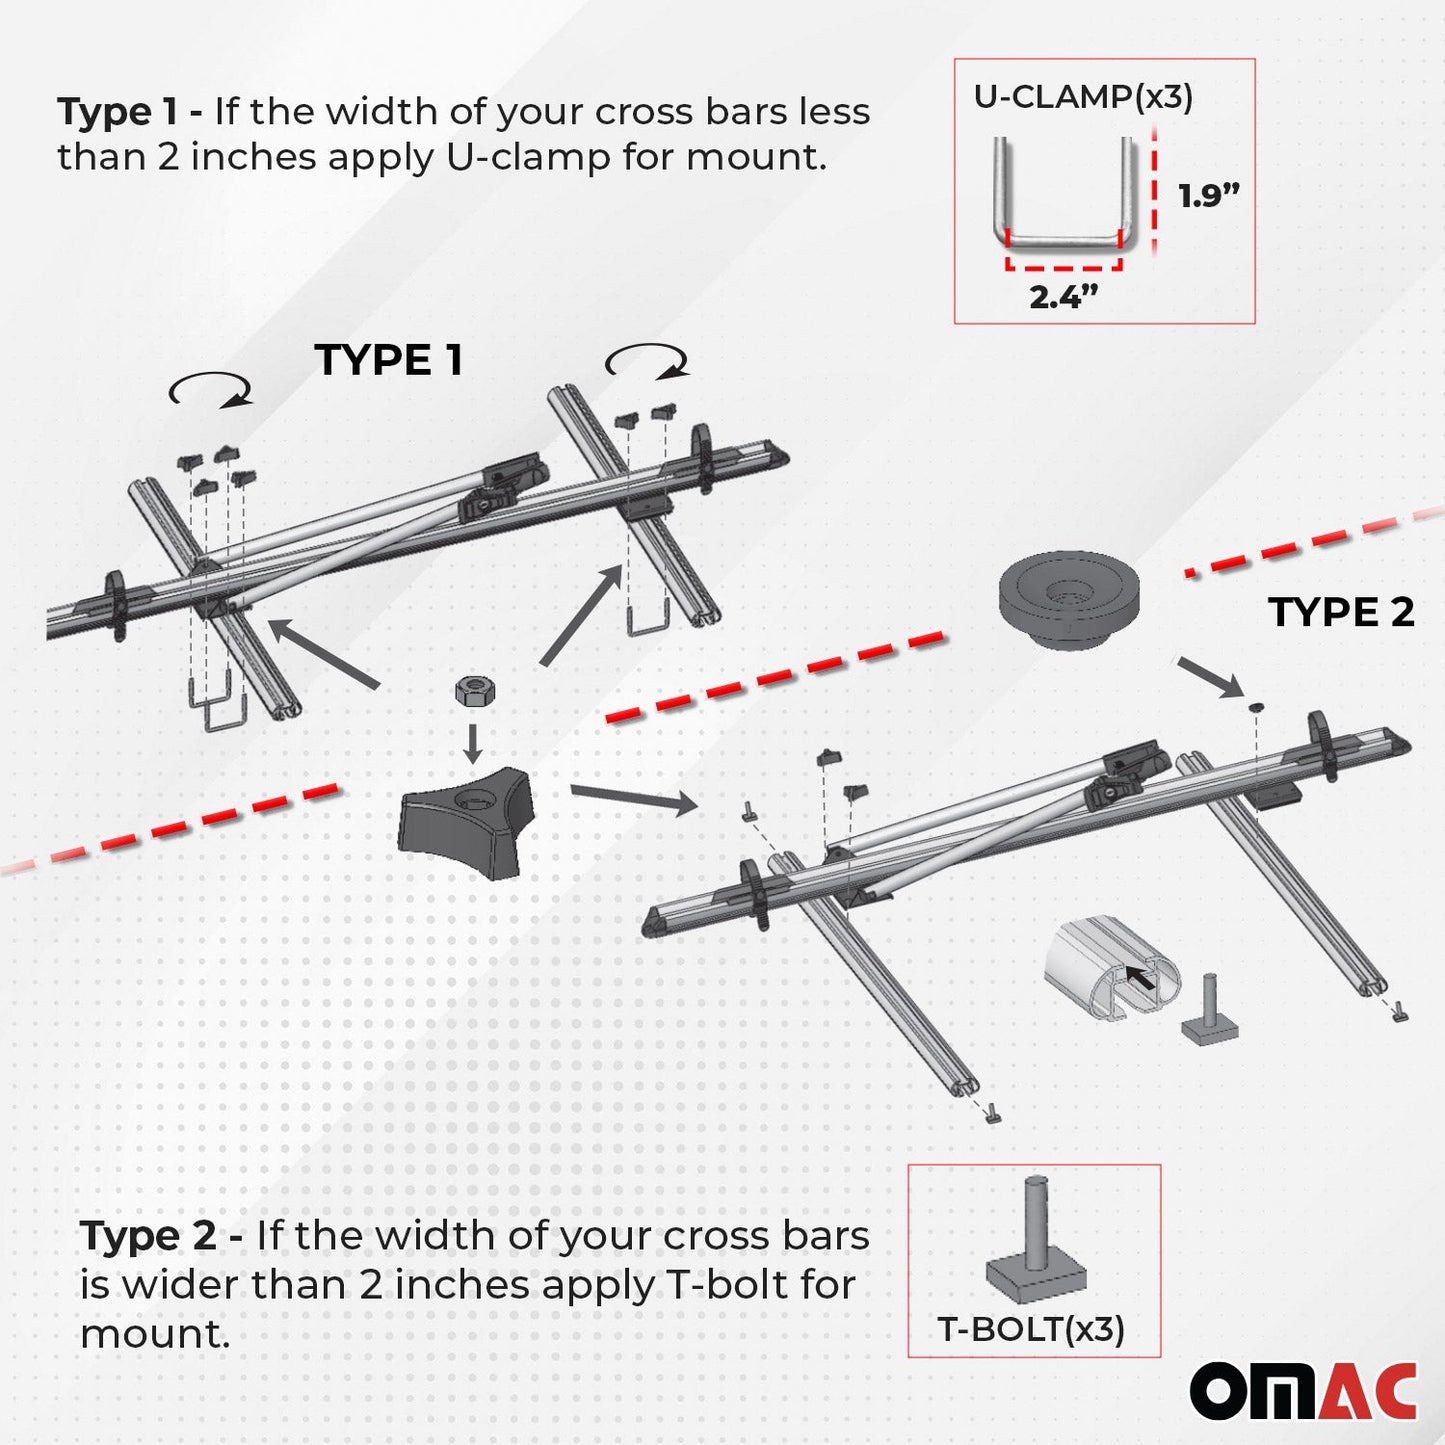 OMAC Bike Rack Carrier Roof Racks Set for Ford Escape 2013-2019 Silver 3x U020640